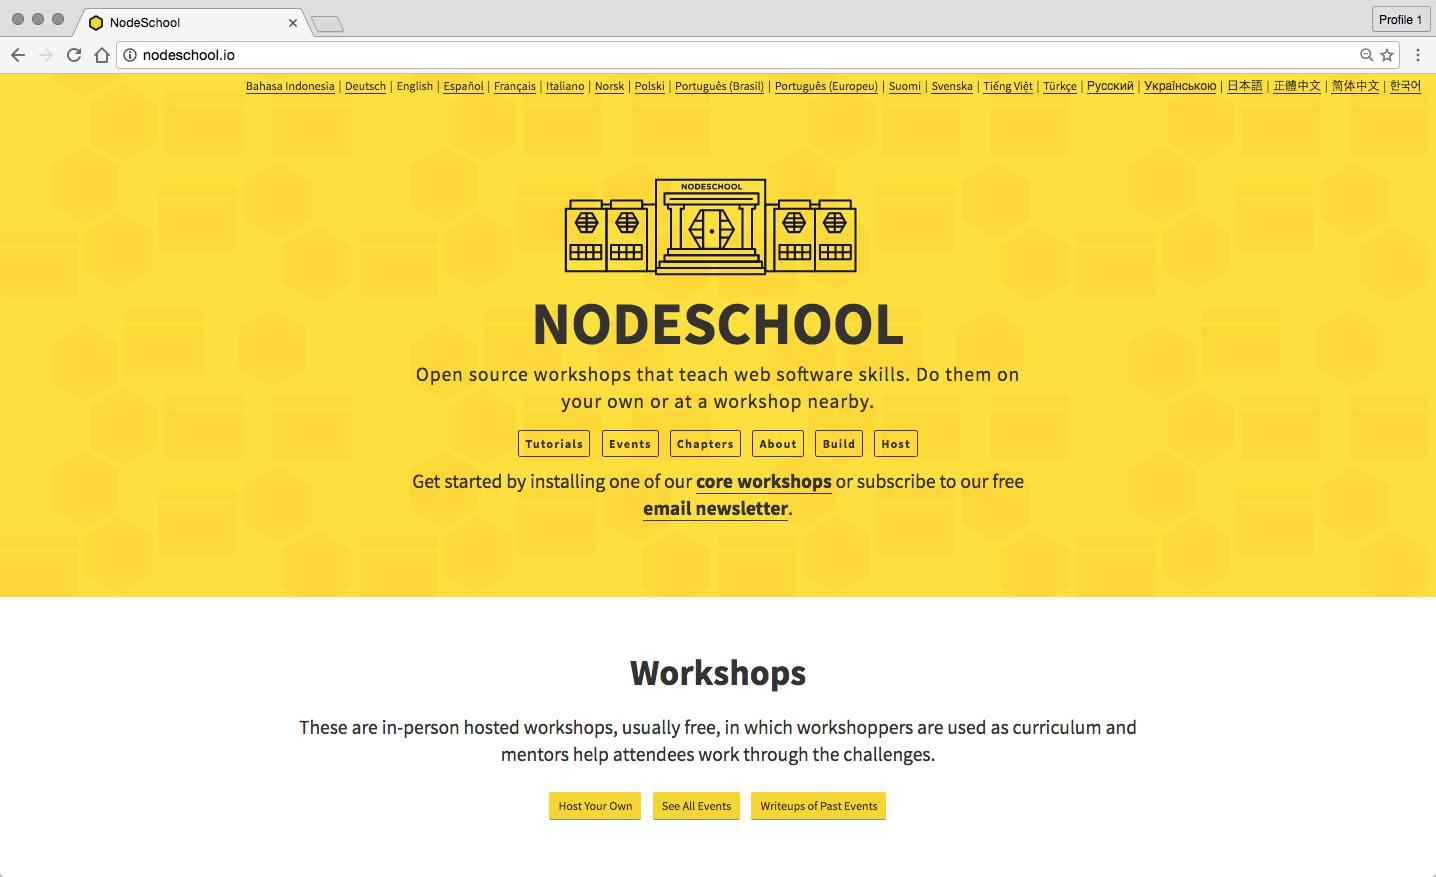 a screenshot of the beautiful current nodeschool homepage